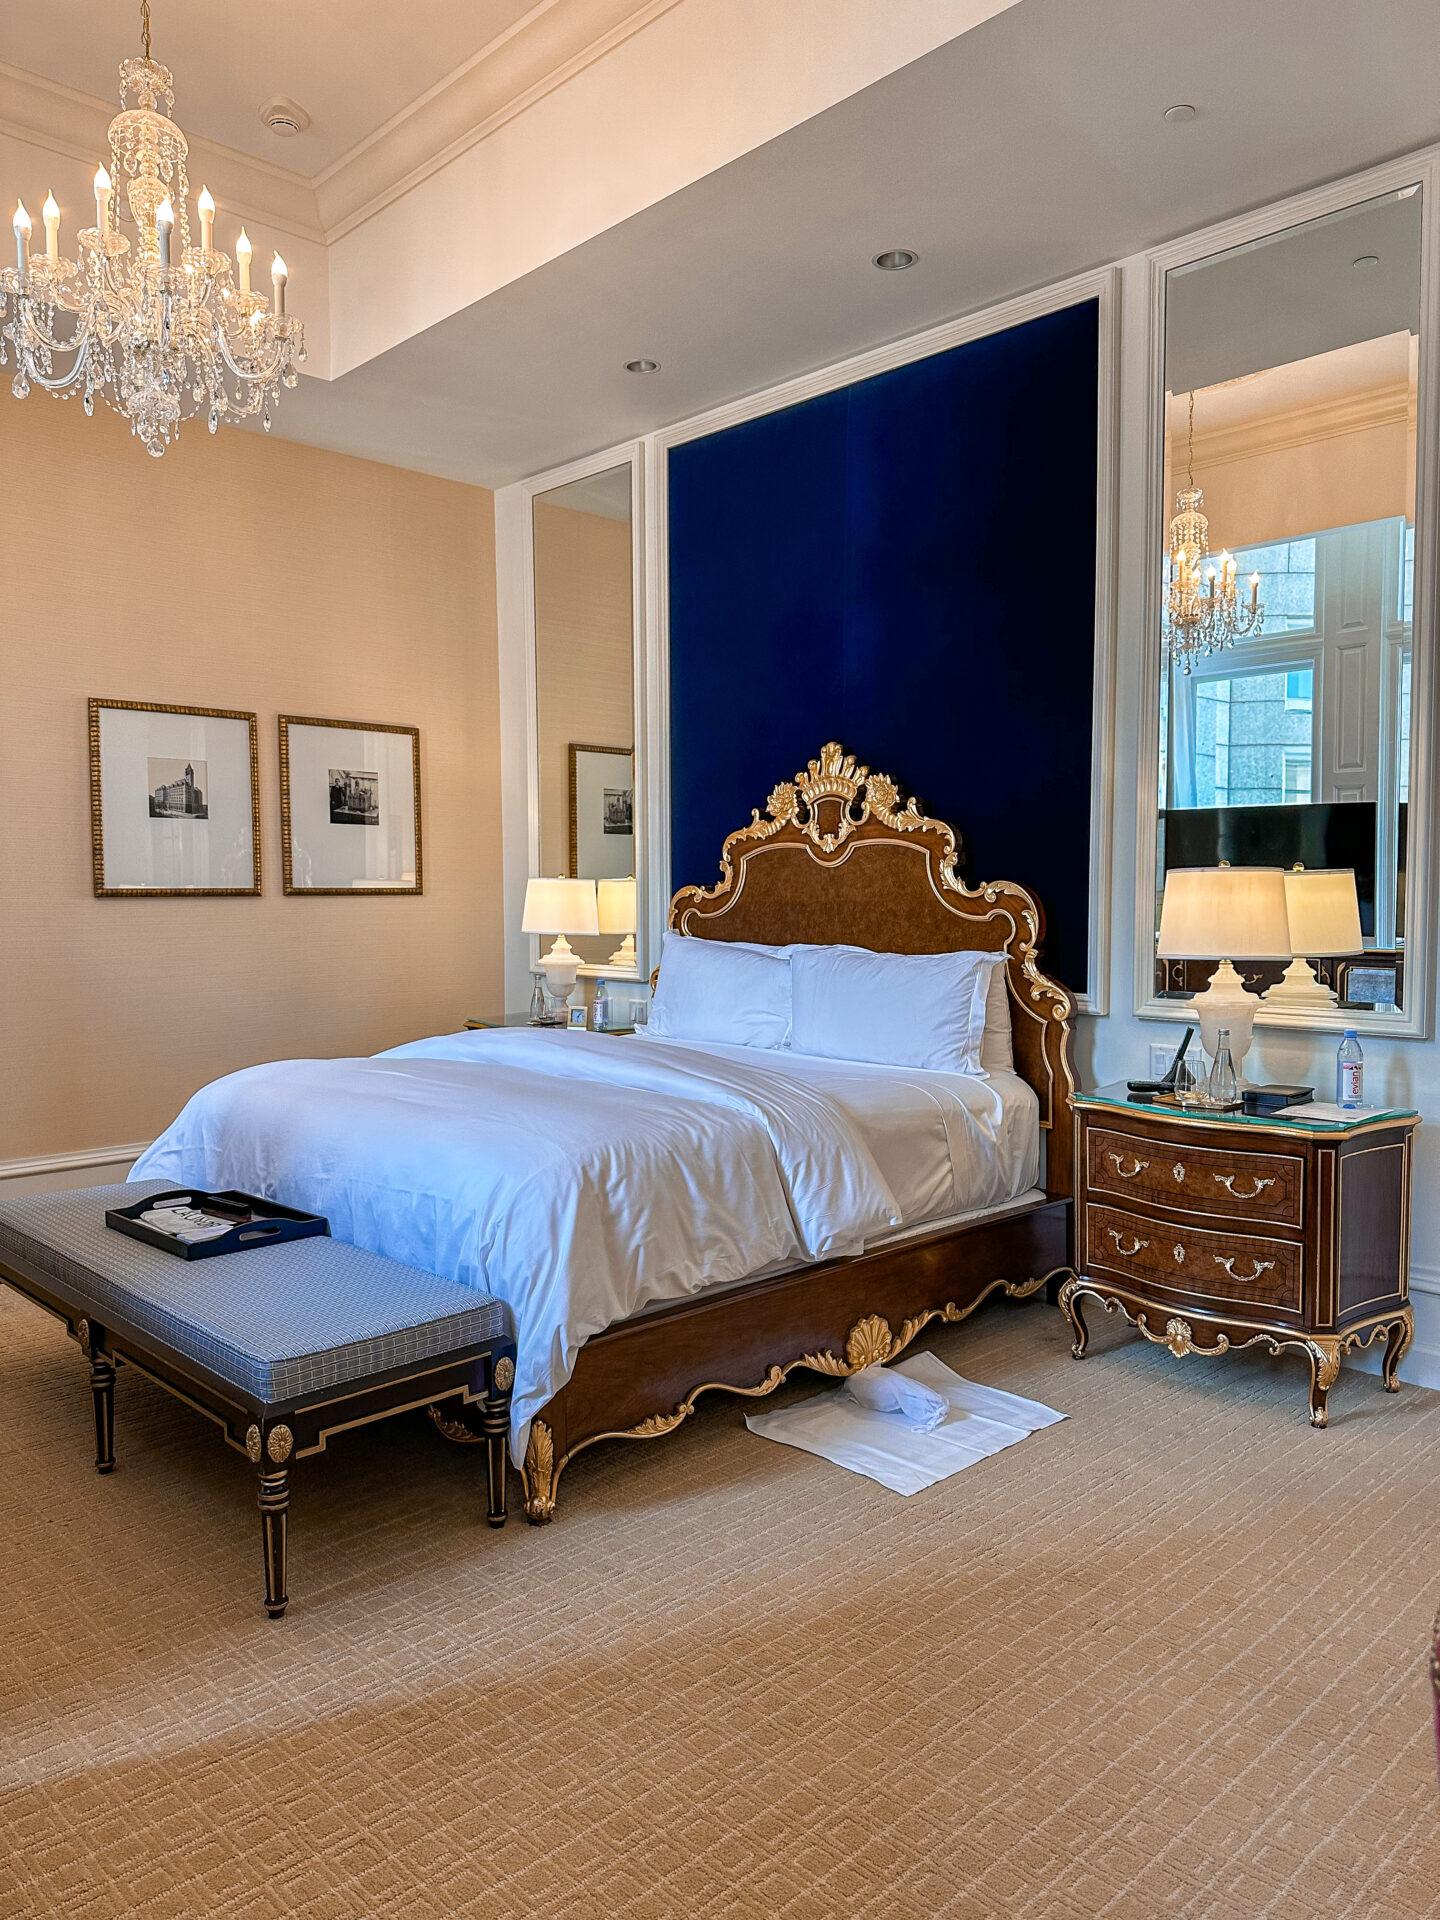 Waldorf Astoria Washington DC review by travel blogger Angela Lanter